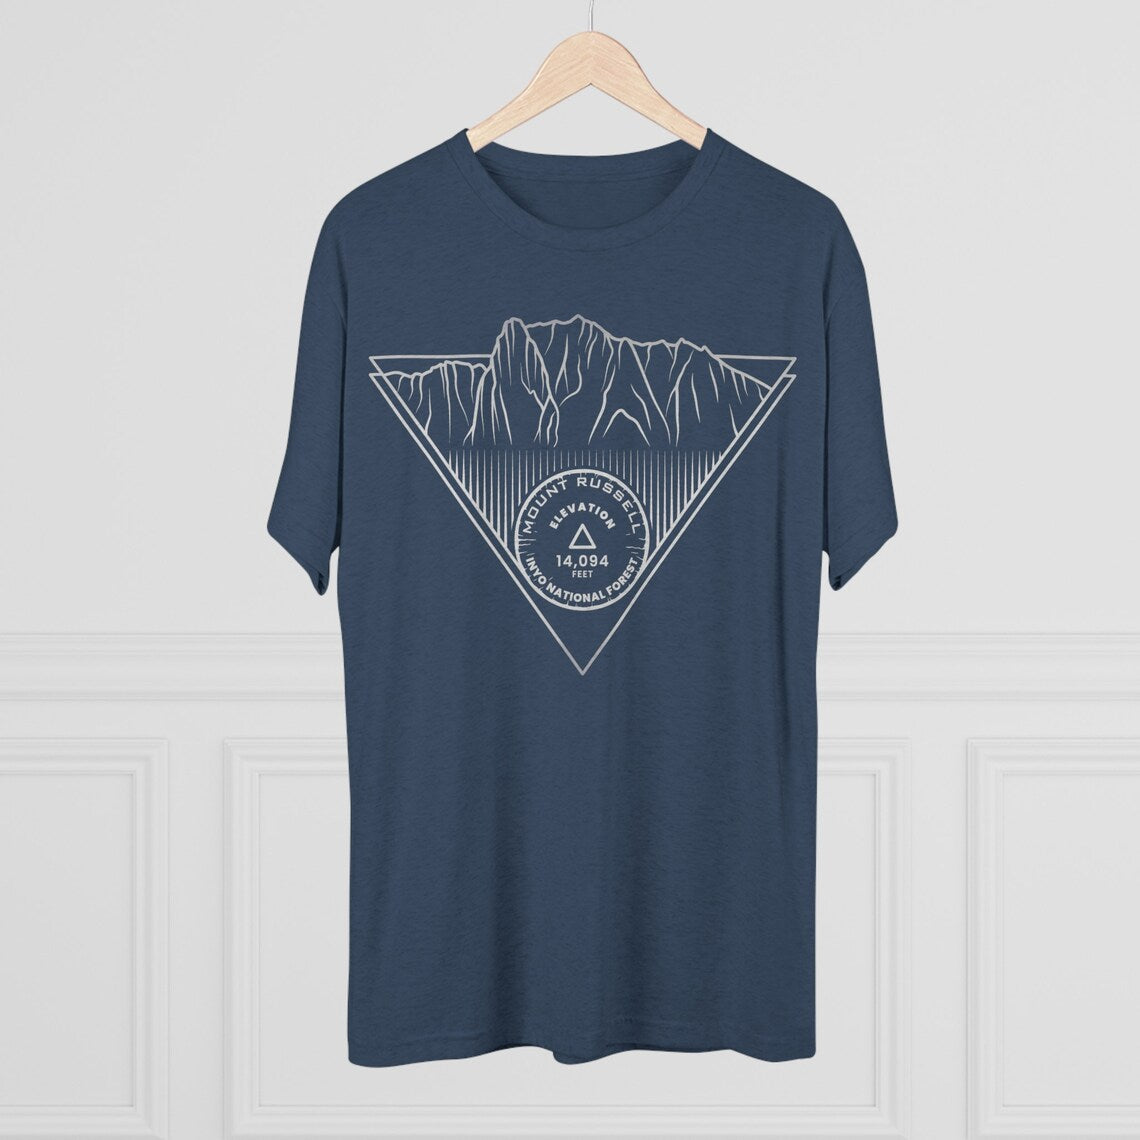 Mount Russell Peak Minimalist T Shirt